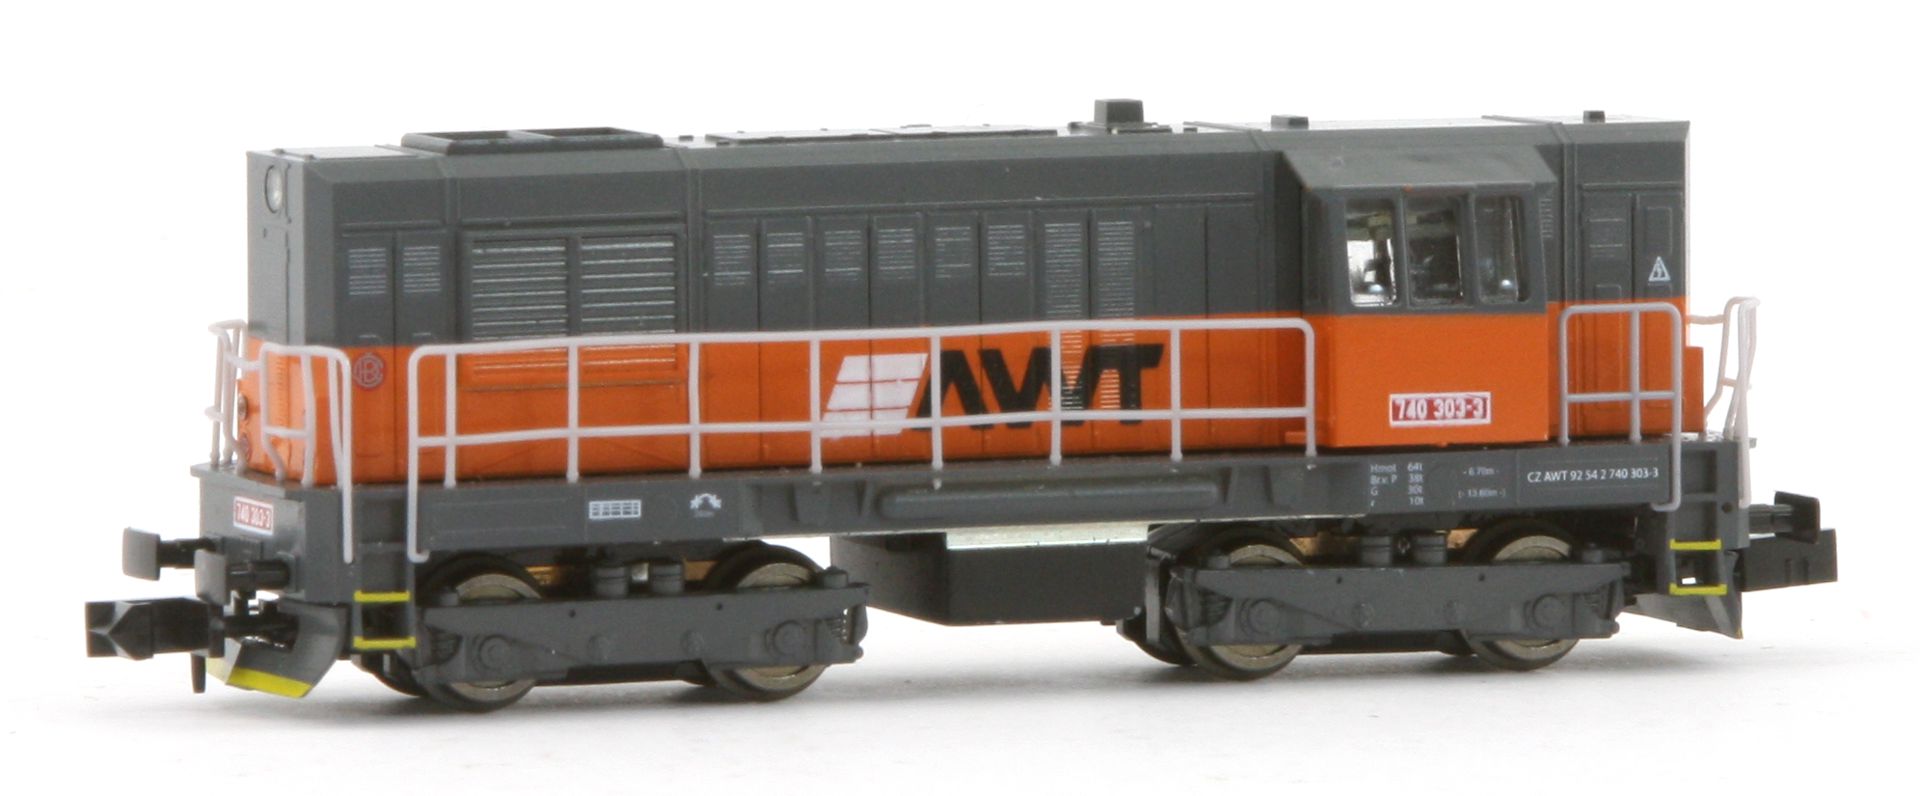 mtb NAWT740-303 - Diesellok 740 303, AWT, Ep.VI